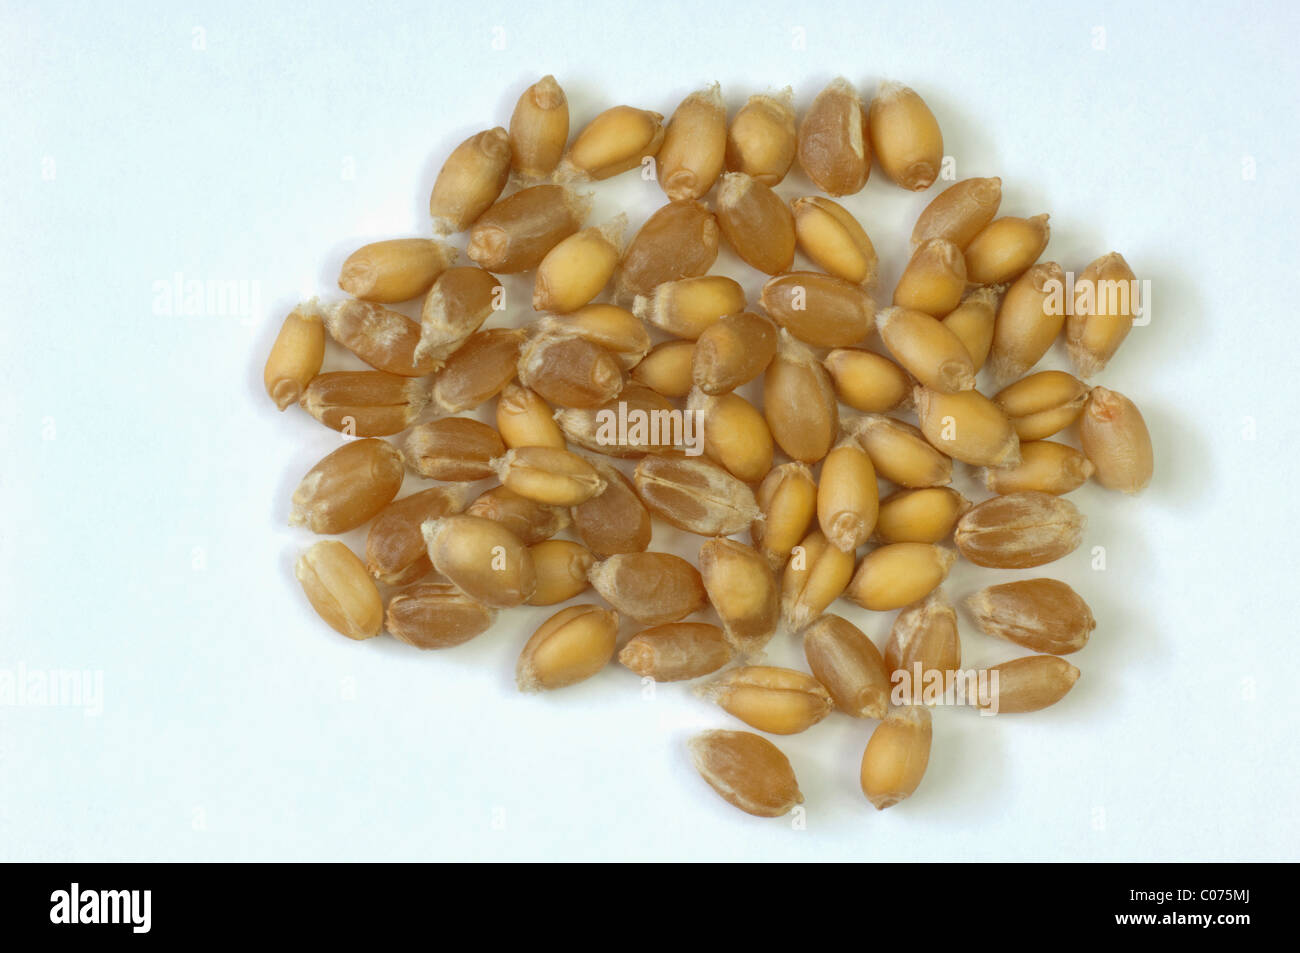 Common Wheat, Bread Wheat (Triticum aestivum), ripe corns. Studio picture against a white background. Stock Photo